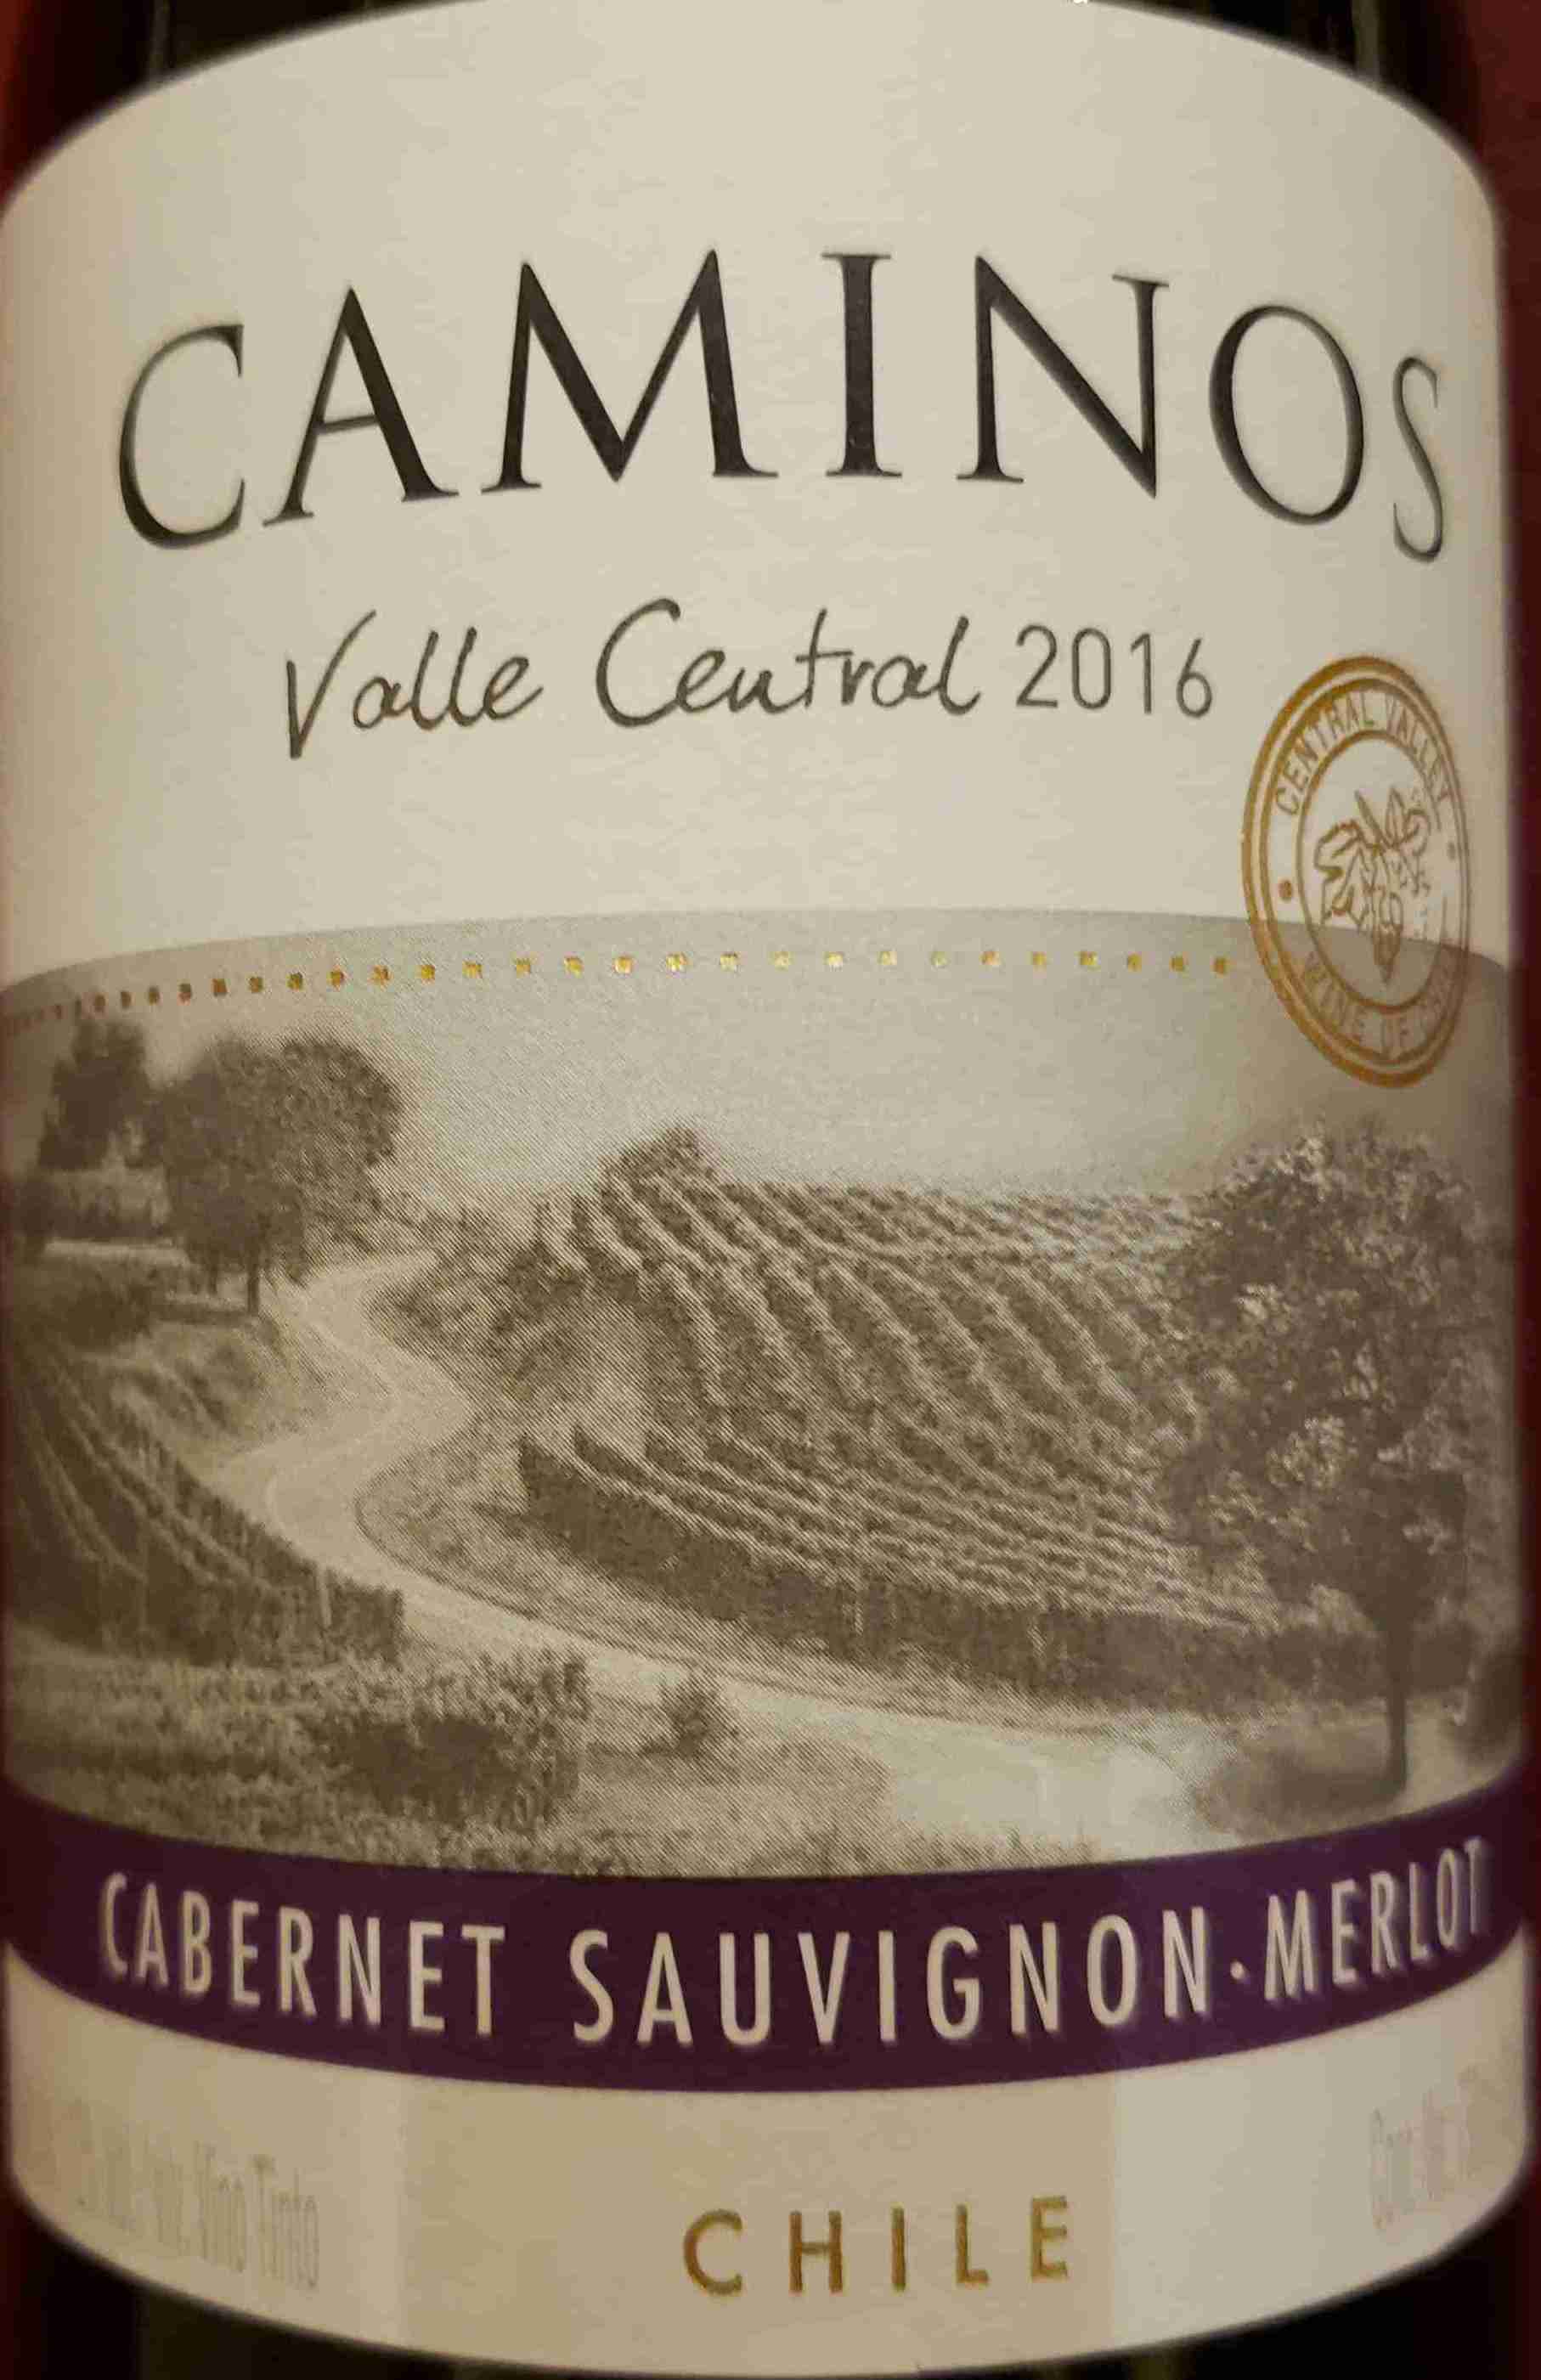 Caminos Terra Sauvignon Andina Merlot, Central -安迪娜酒庄葡萄酒-价格-评价-中文名-红酒世界网 Chile Valley, Cabernet